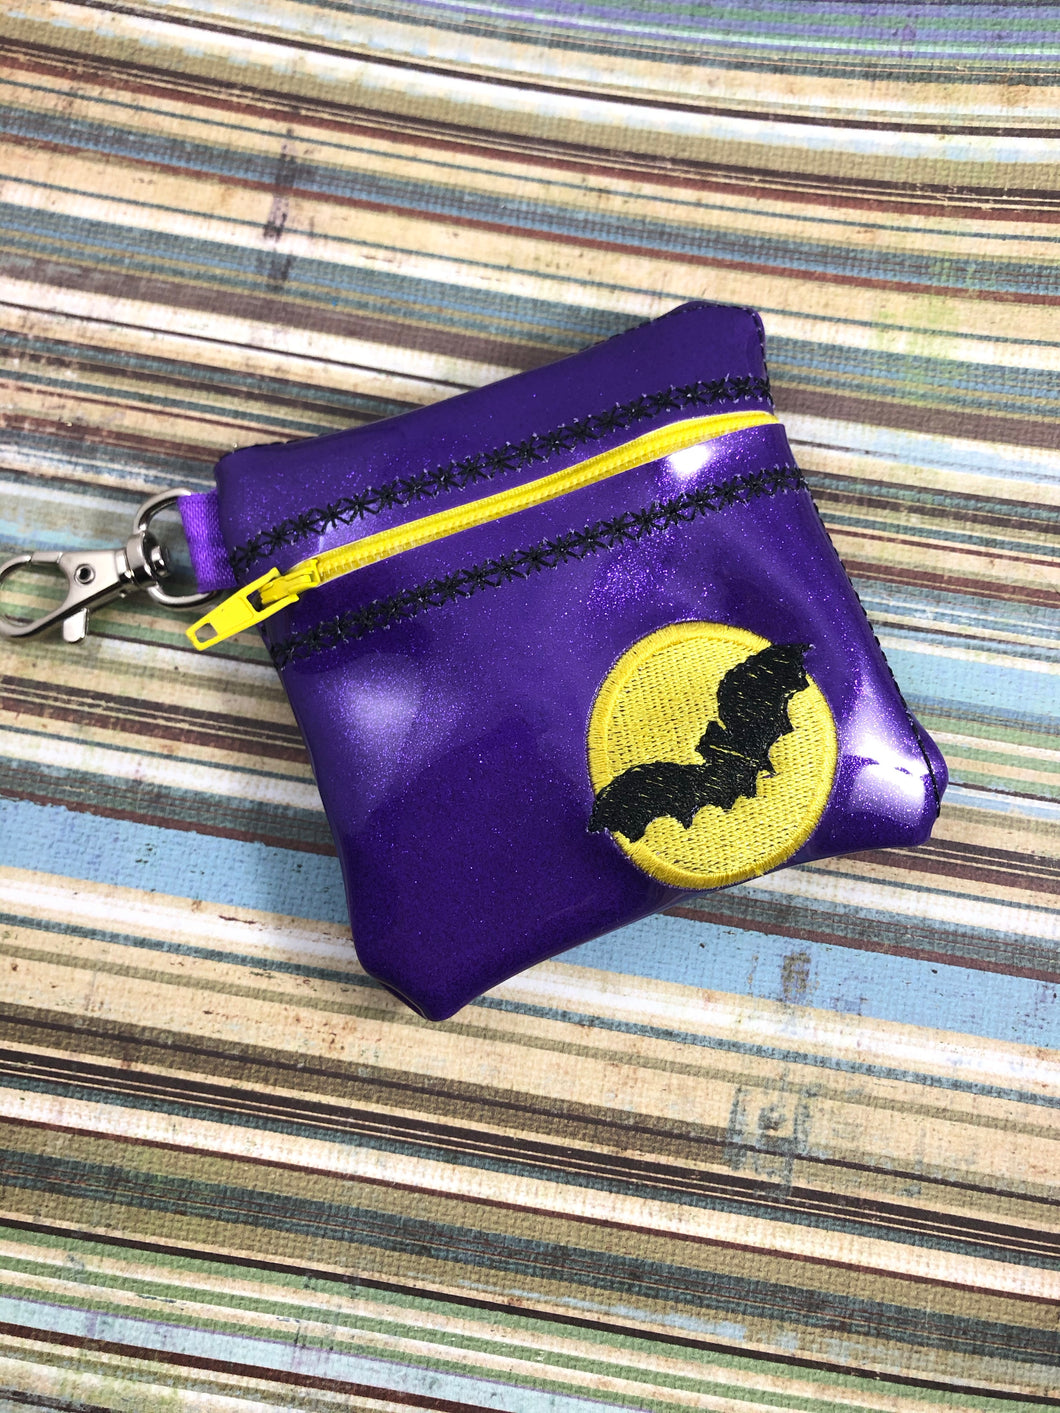 Bat Across the Harvest Moon Zipper Pouch 4x4